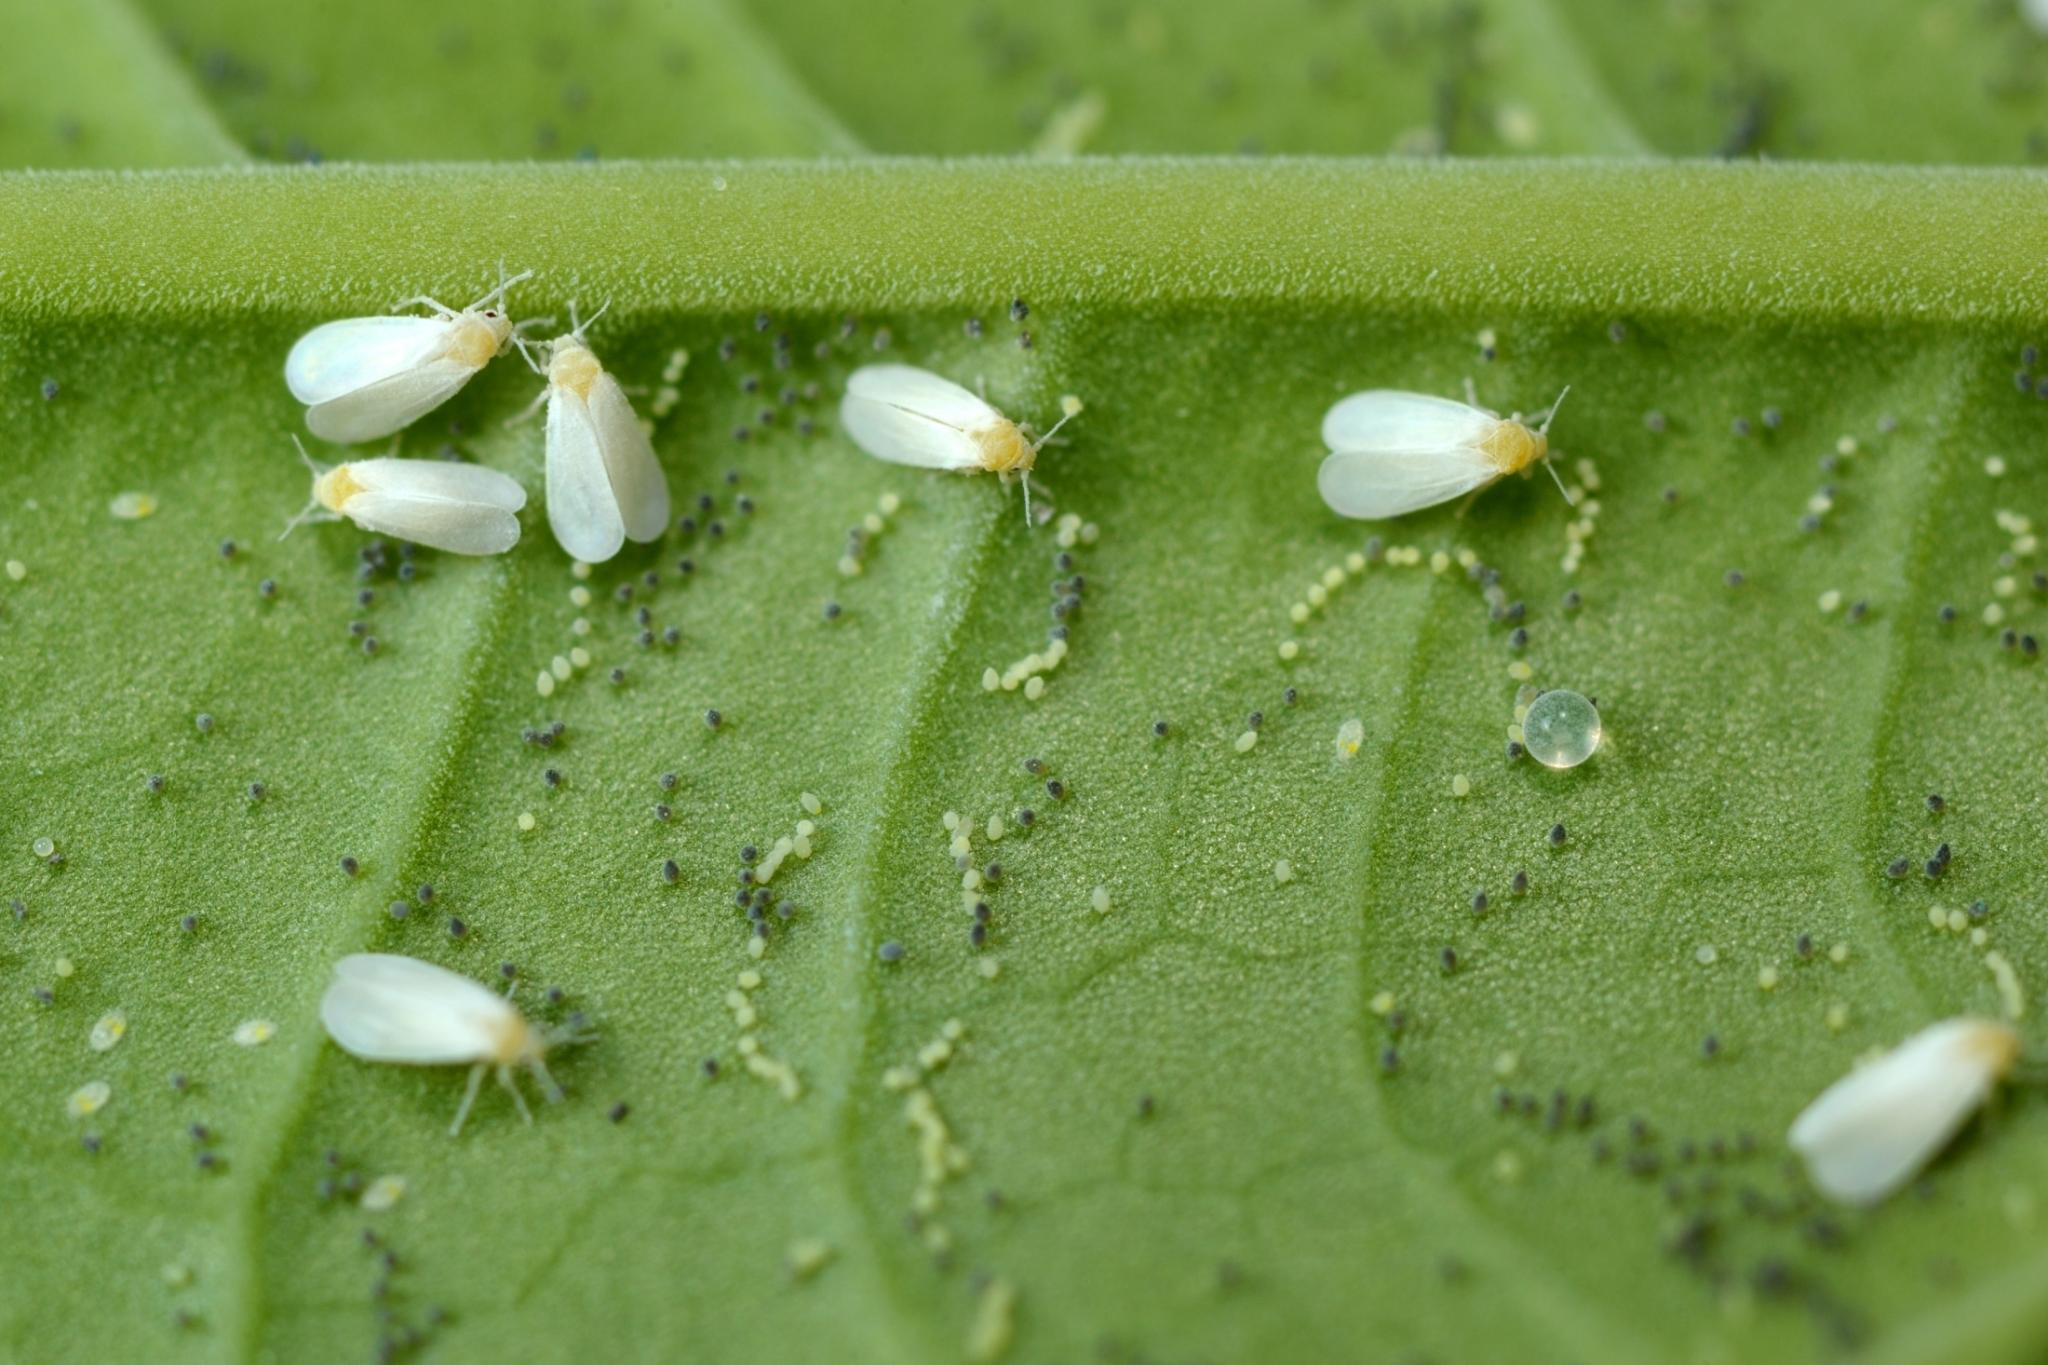 Whiteflies on leaf with eggs. Photo by D. Kucharski & K. Kucharska/Shuttertstock